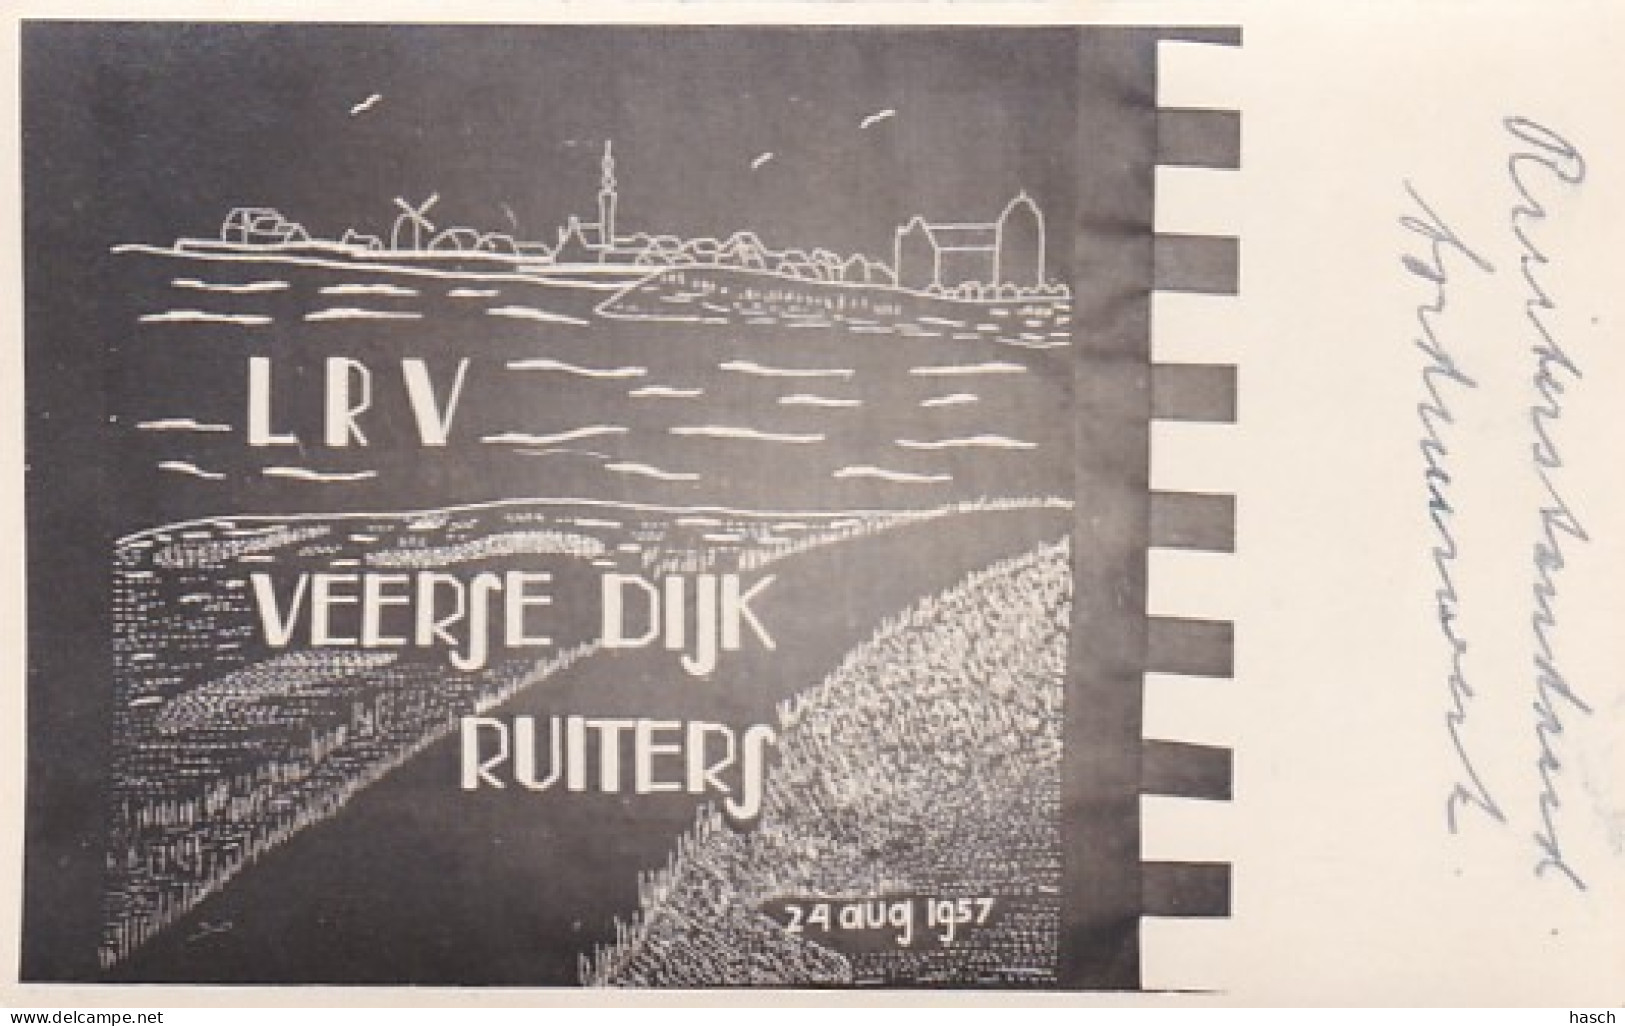 4843716Veere, Veerse Dijk Ruiters L. R. V. 24 Aug. 1957.(FOTO) - Veere